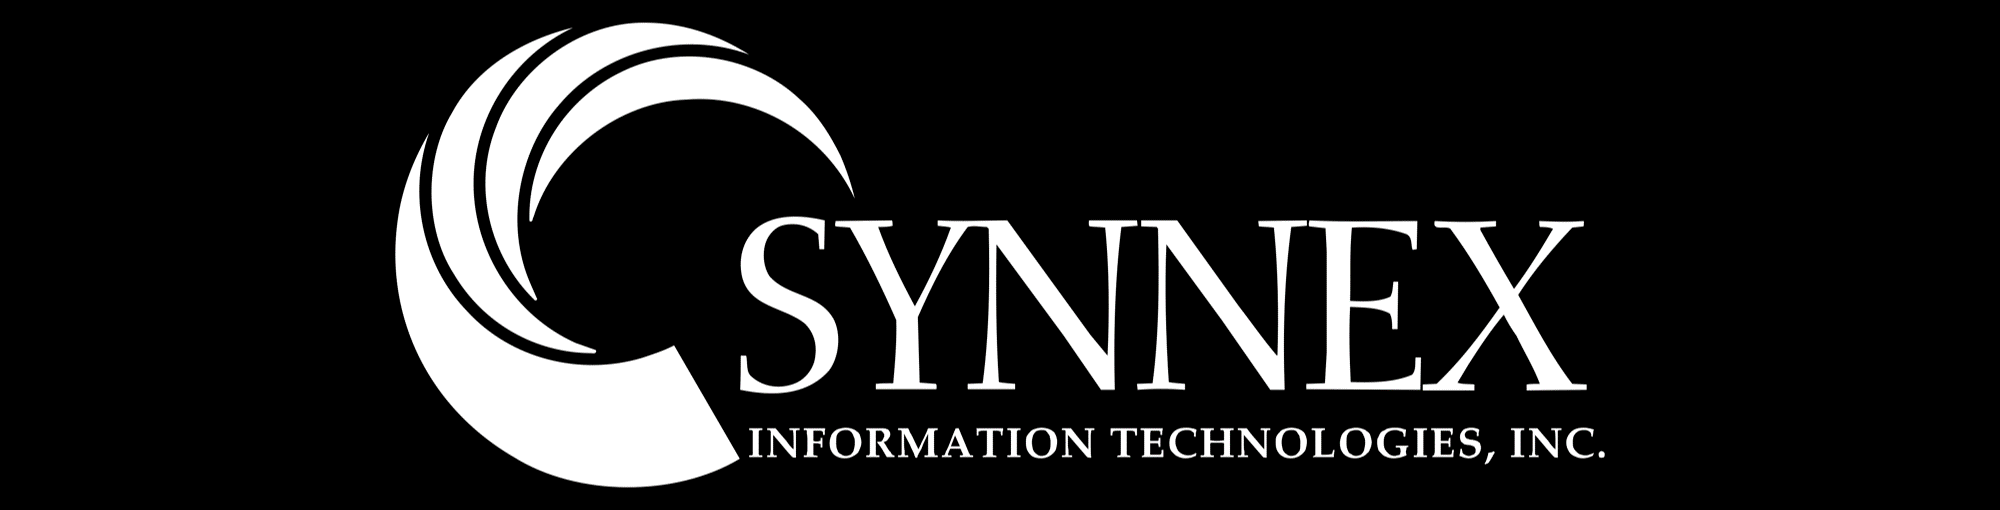 SYNNEX Information Technologies